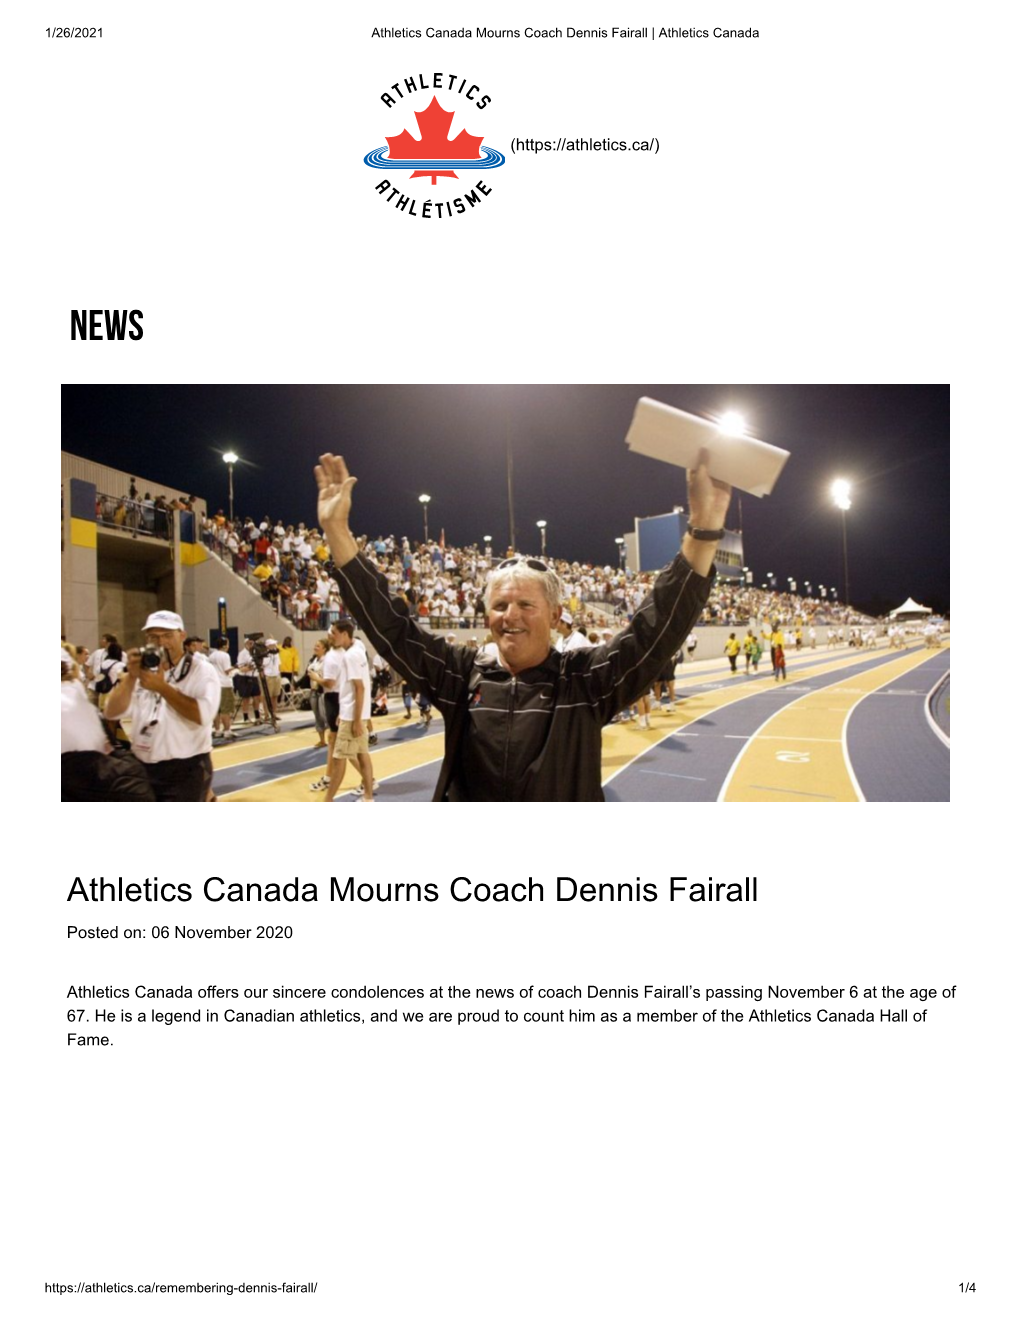 Athletics Canada Mourns Coach Dennis Fairall | Athletics Canada